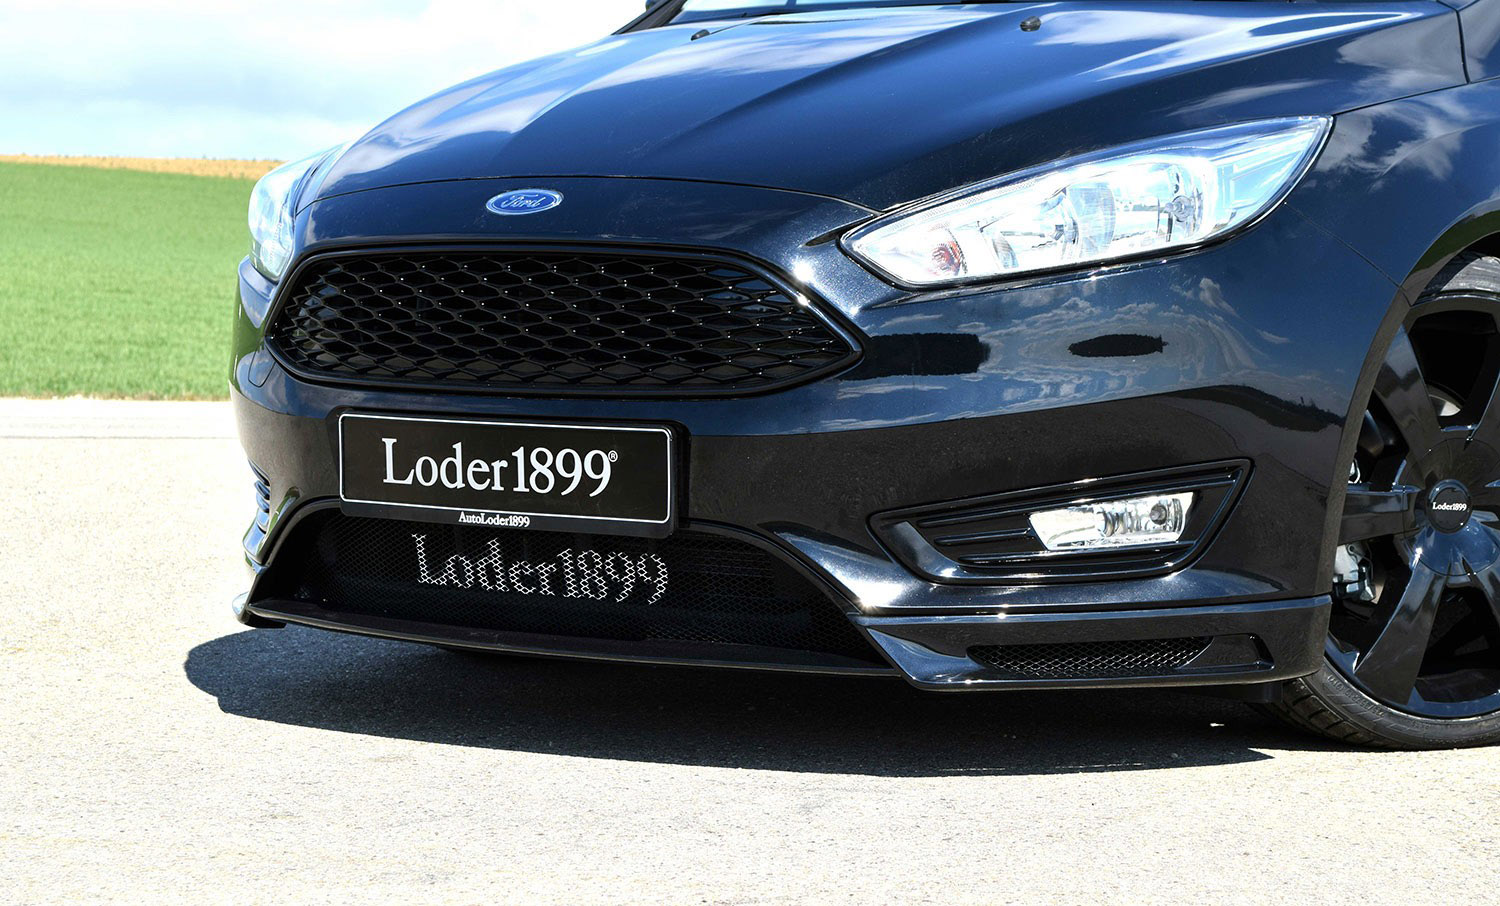 Loder1899 Ford Focus